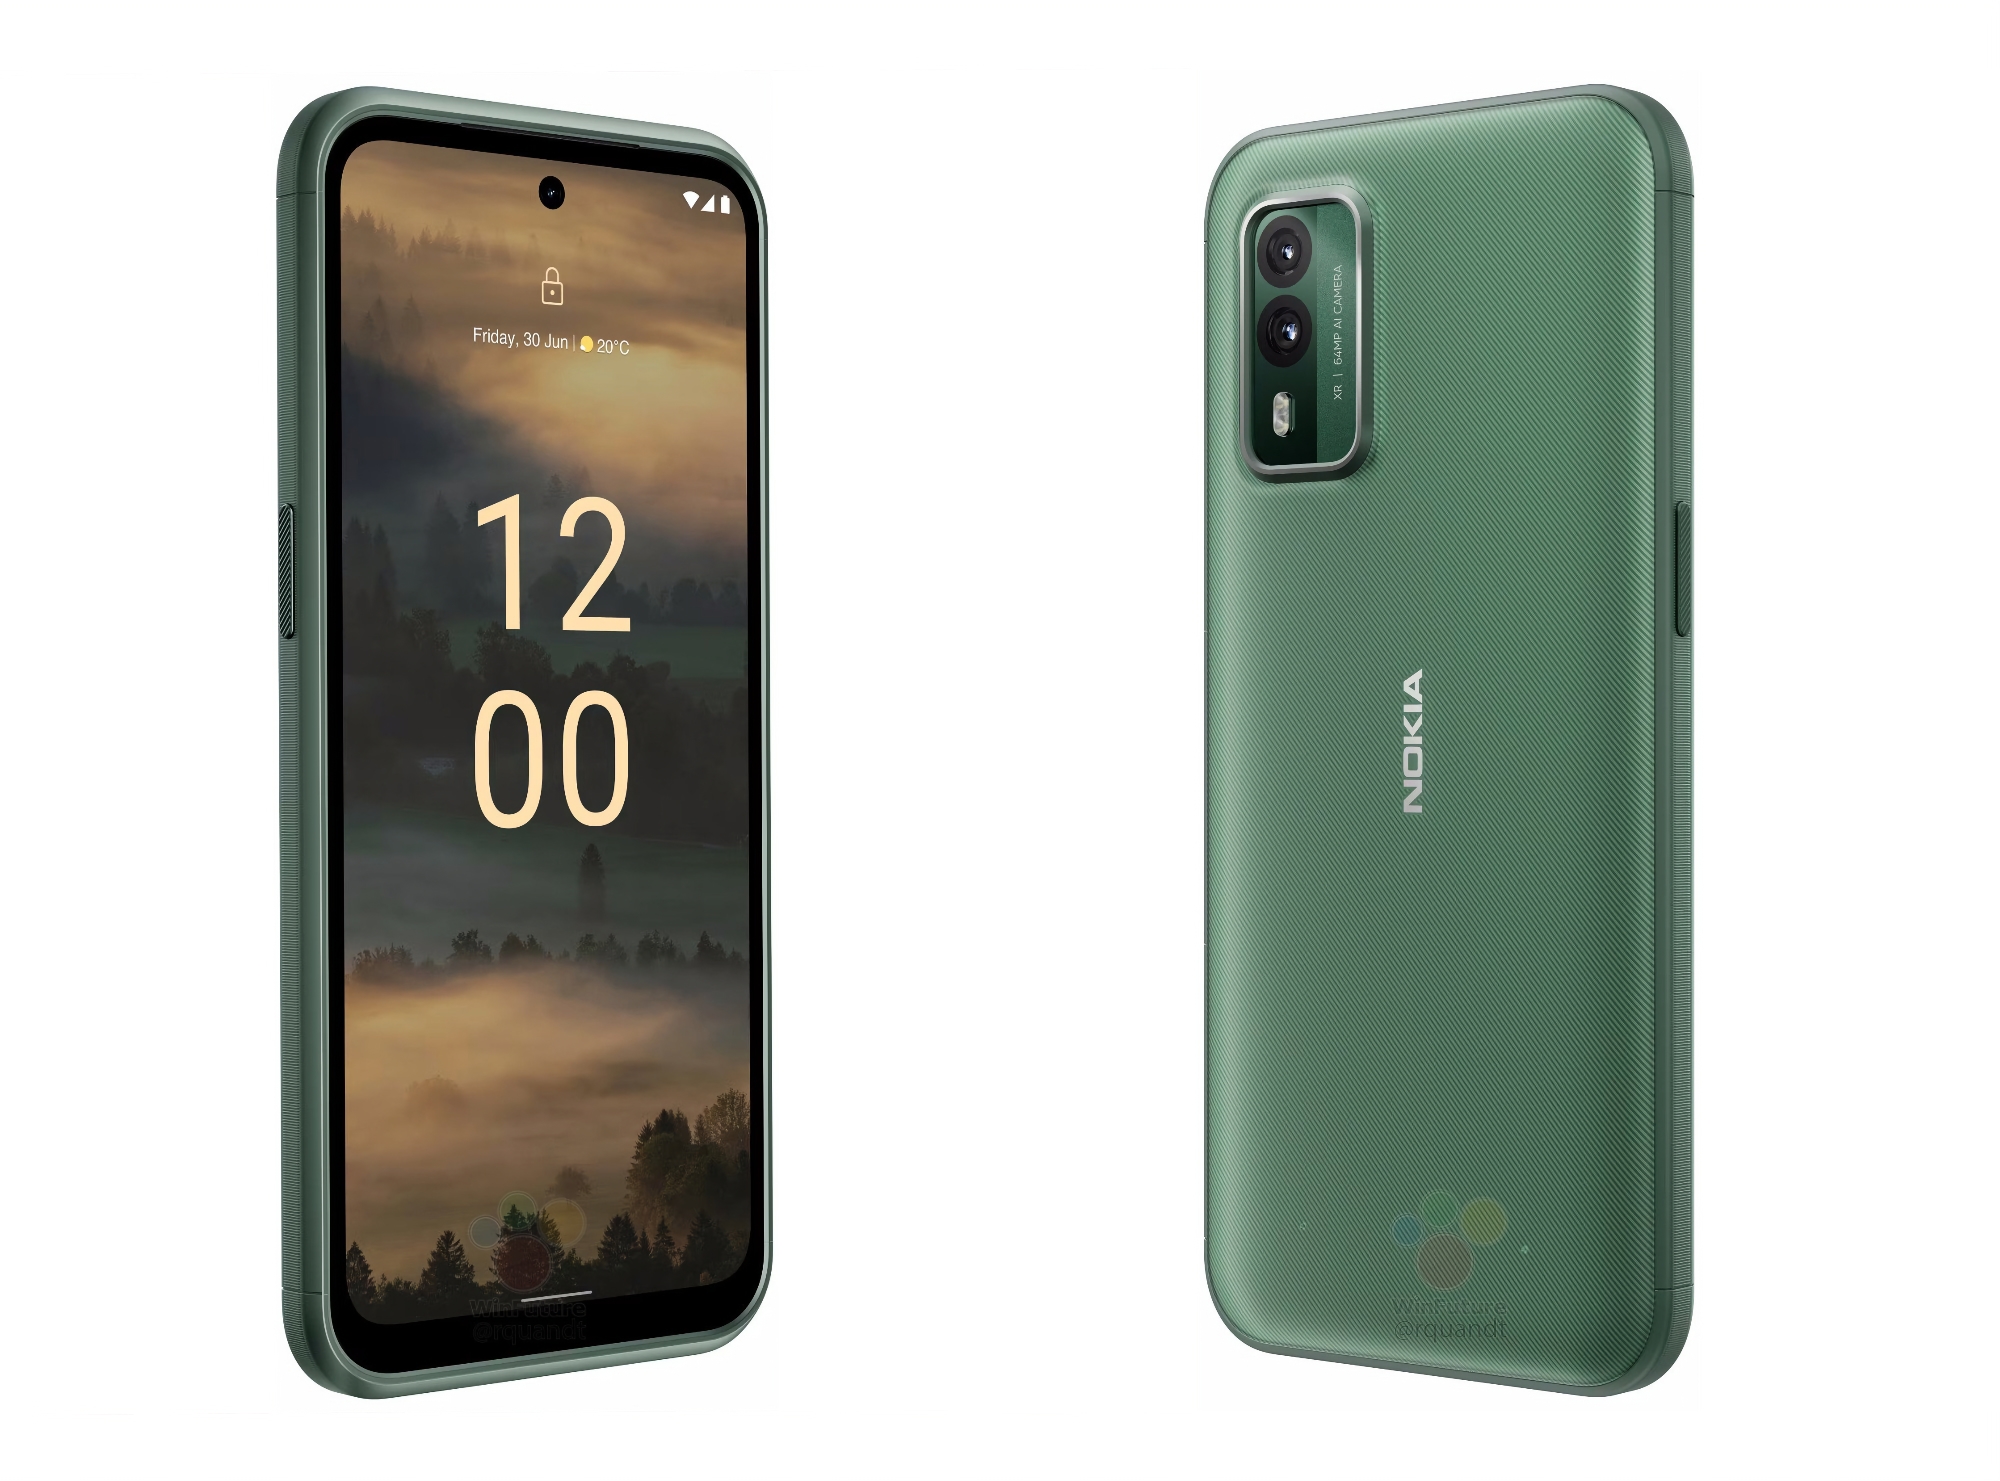 HMD Global lancia Nokia XR30: uno smartphone rugged con 5G, batteria da 4.600 mAh e fotocamera da 64 MP a 499 dollari